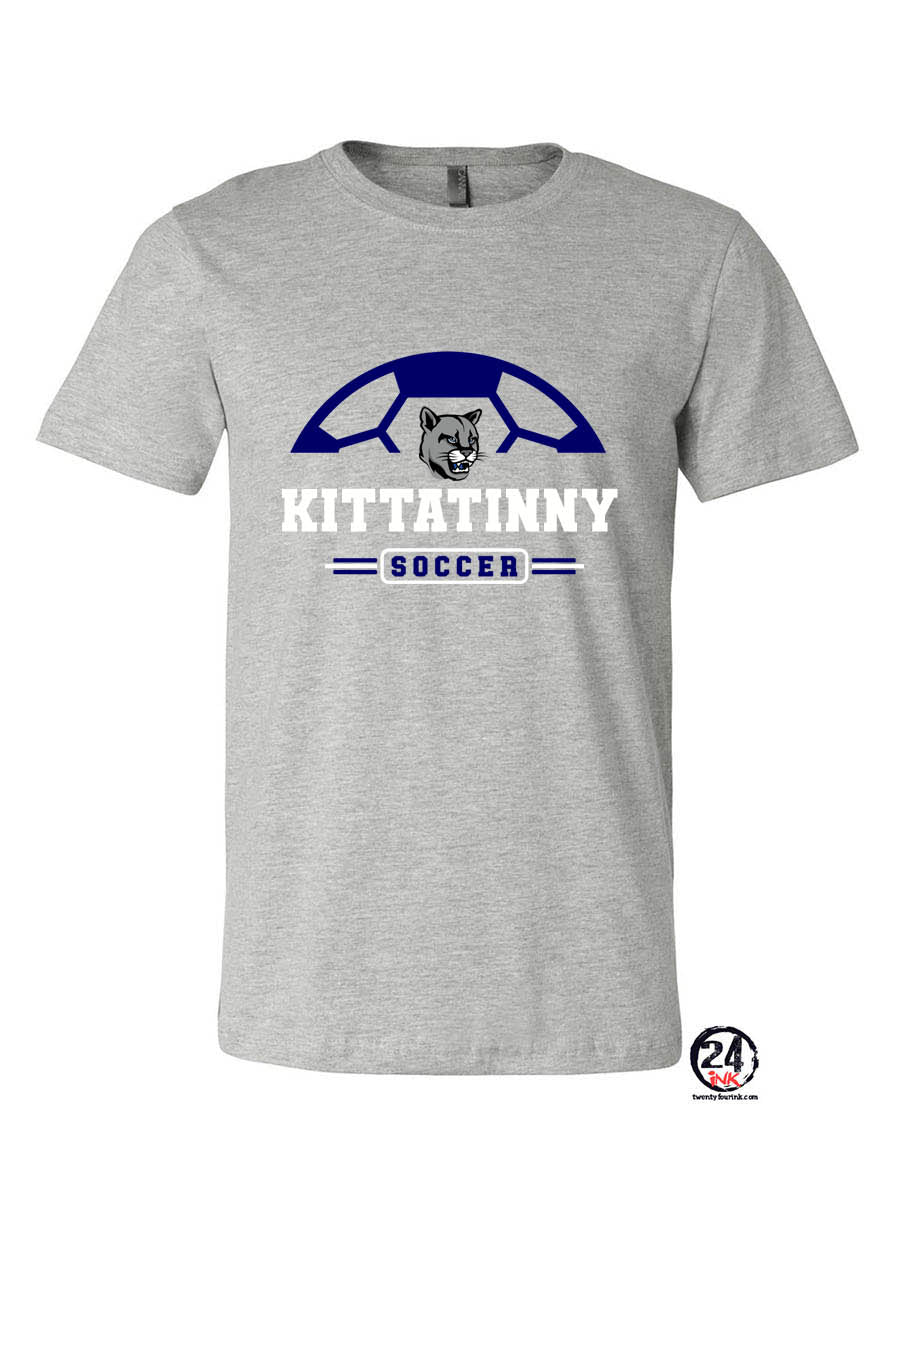 Kittatinny Soccer Design 2 T-Shirt